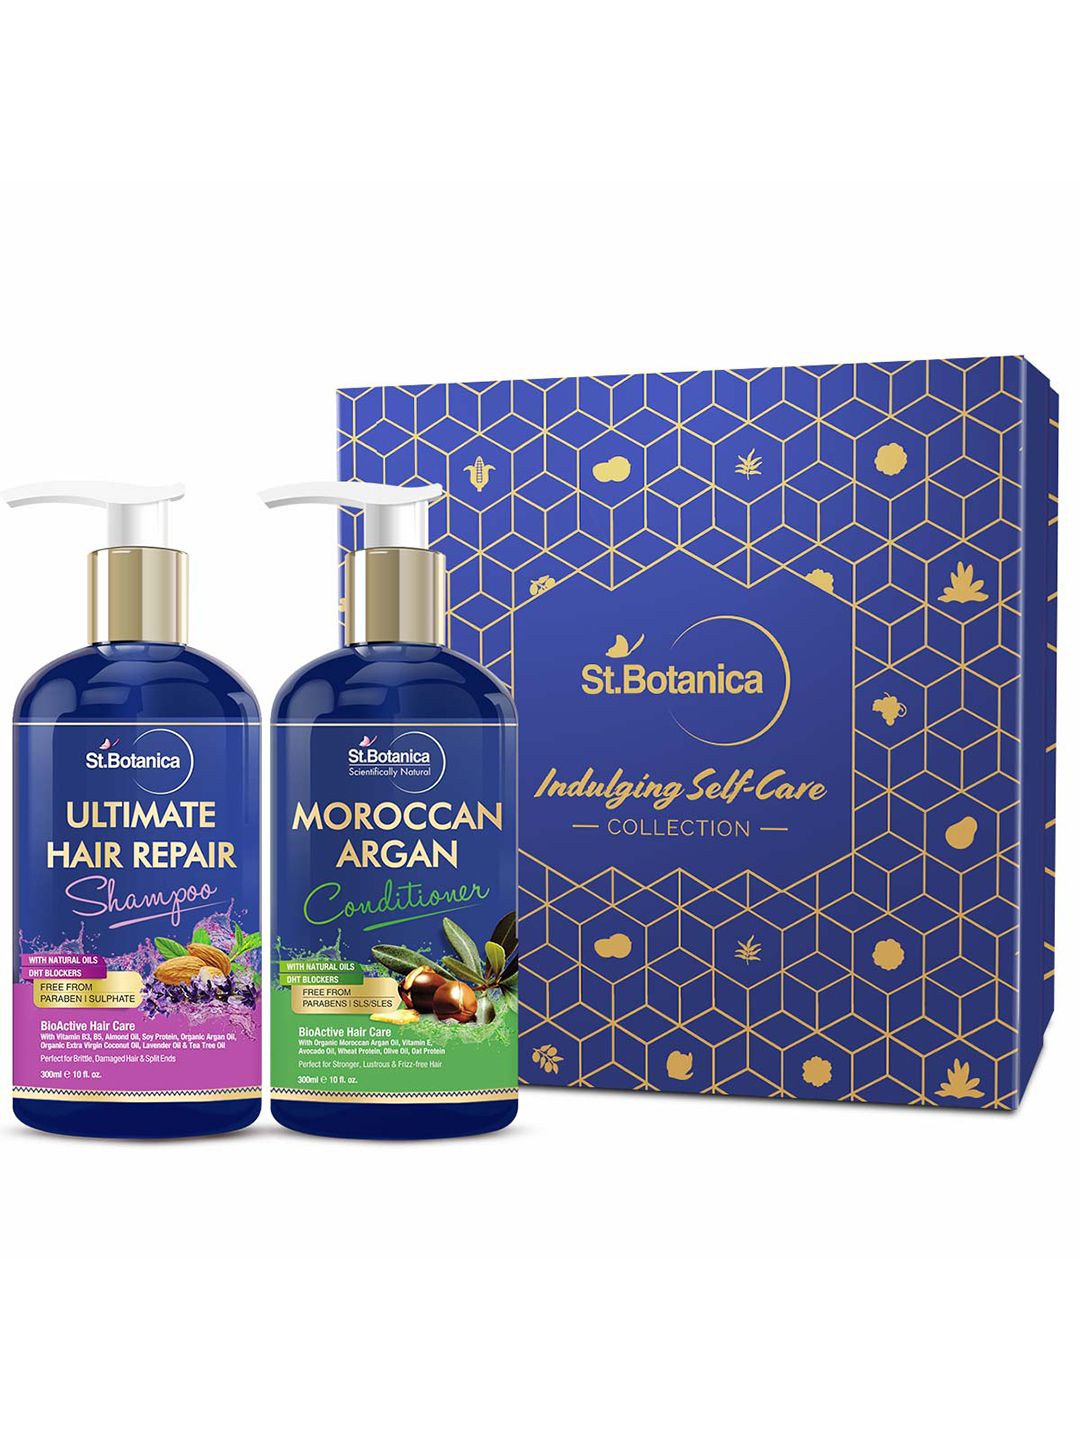 St.Botanica Ultimate Hair Repair Shampoo + Moroccan Argan Hair Conditioner 300ml Each Price in India